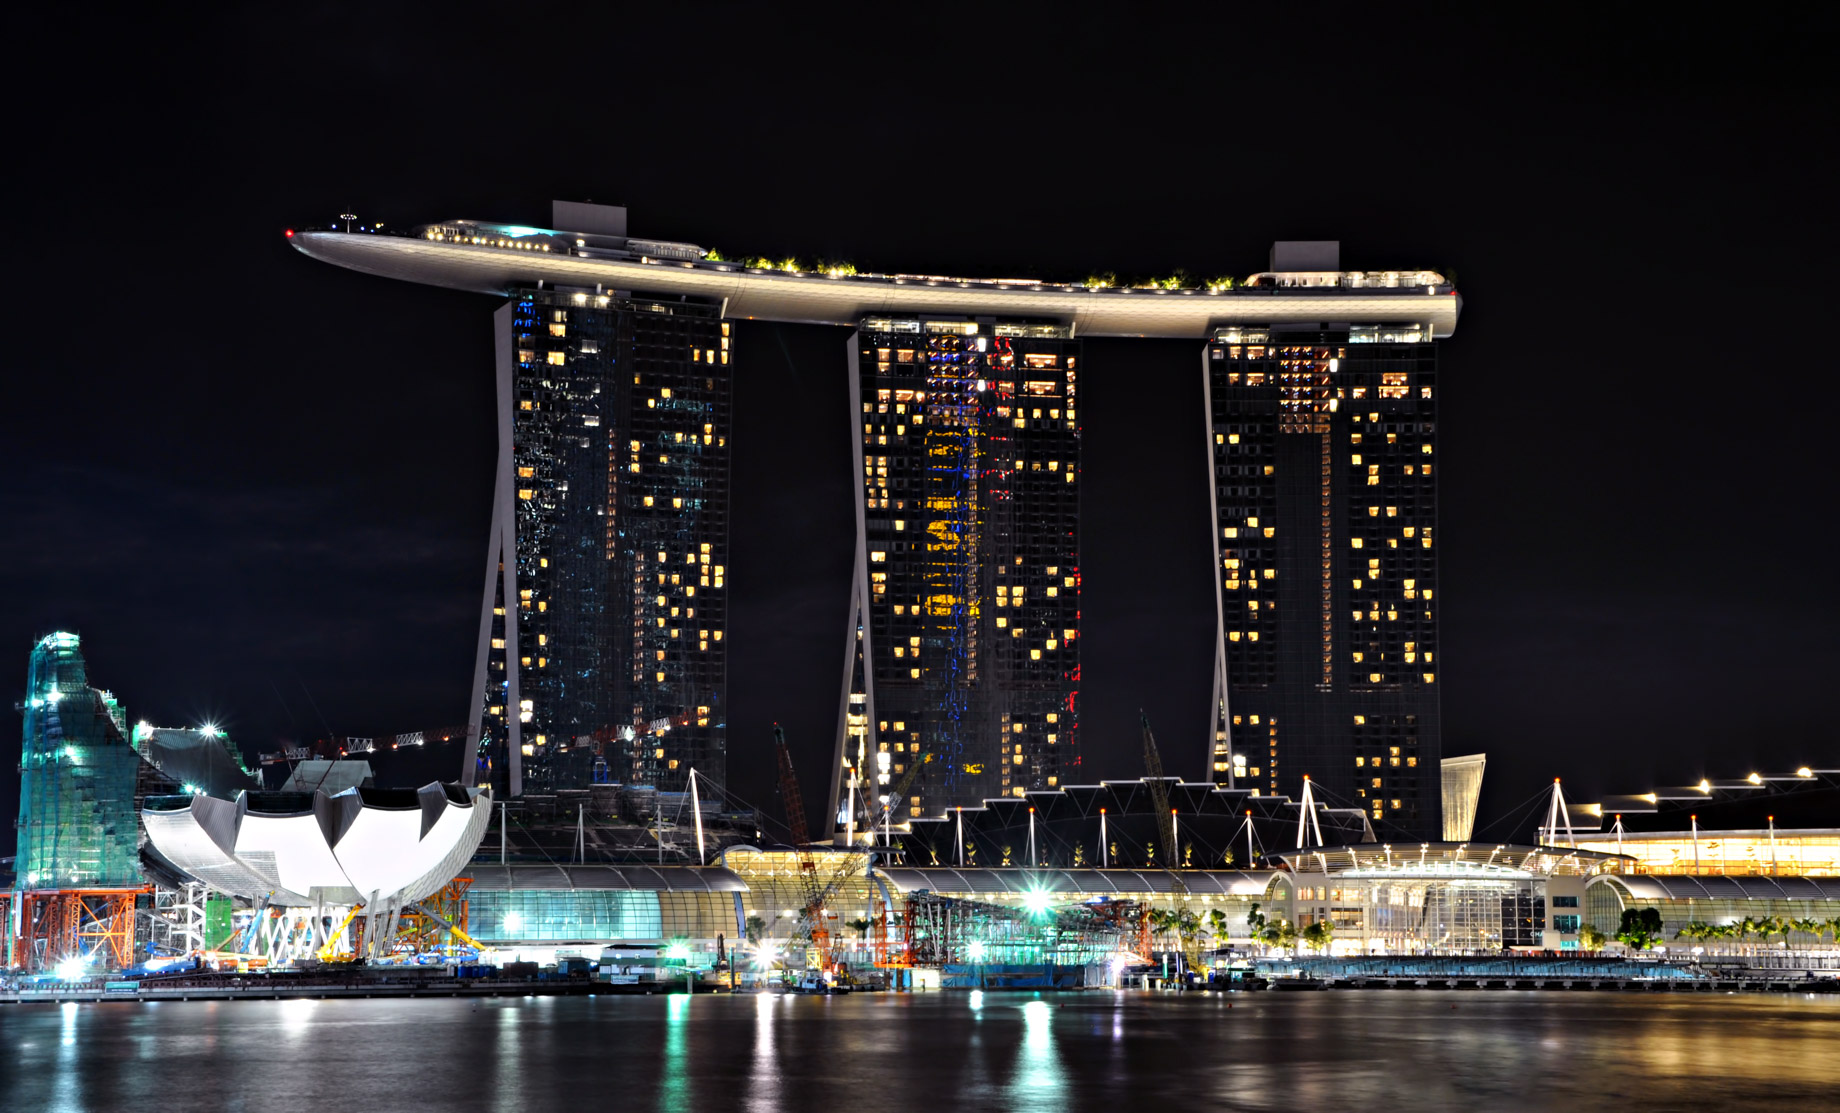 Marina Bay Sands Casino - Singapore